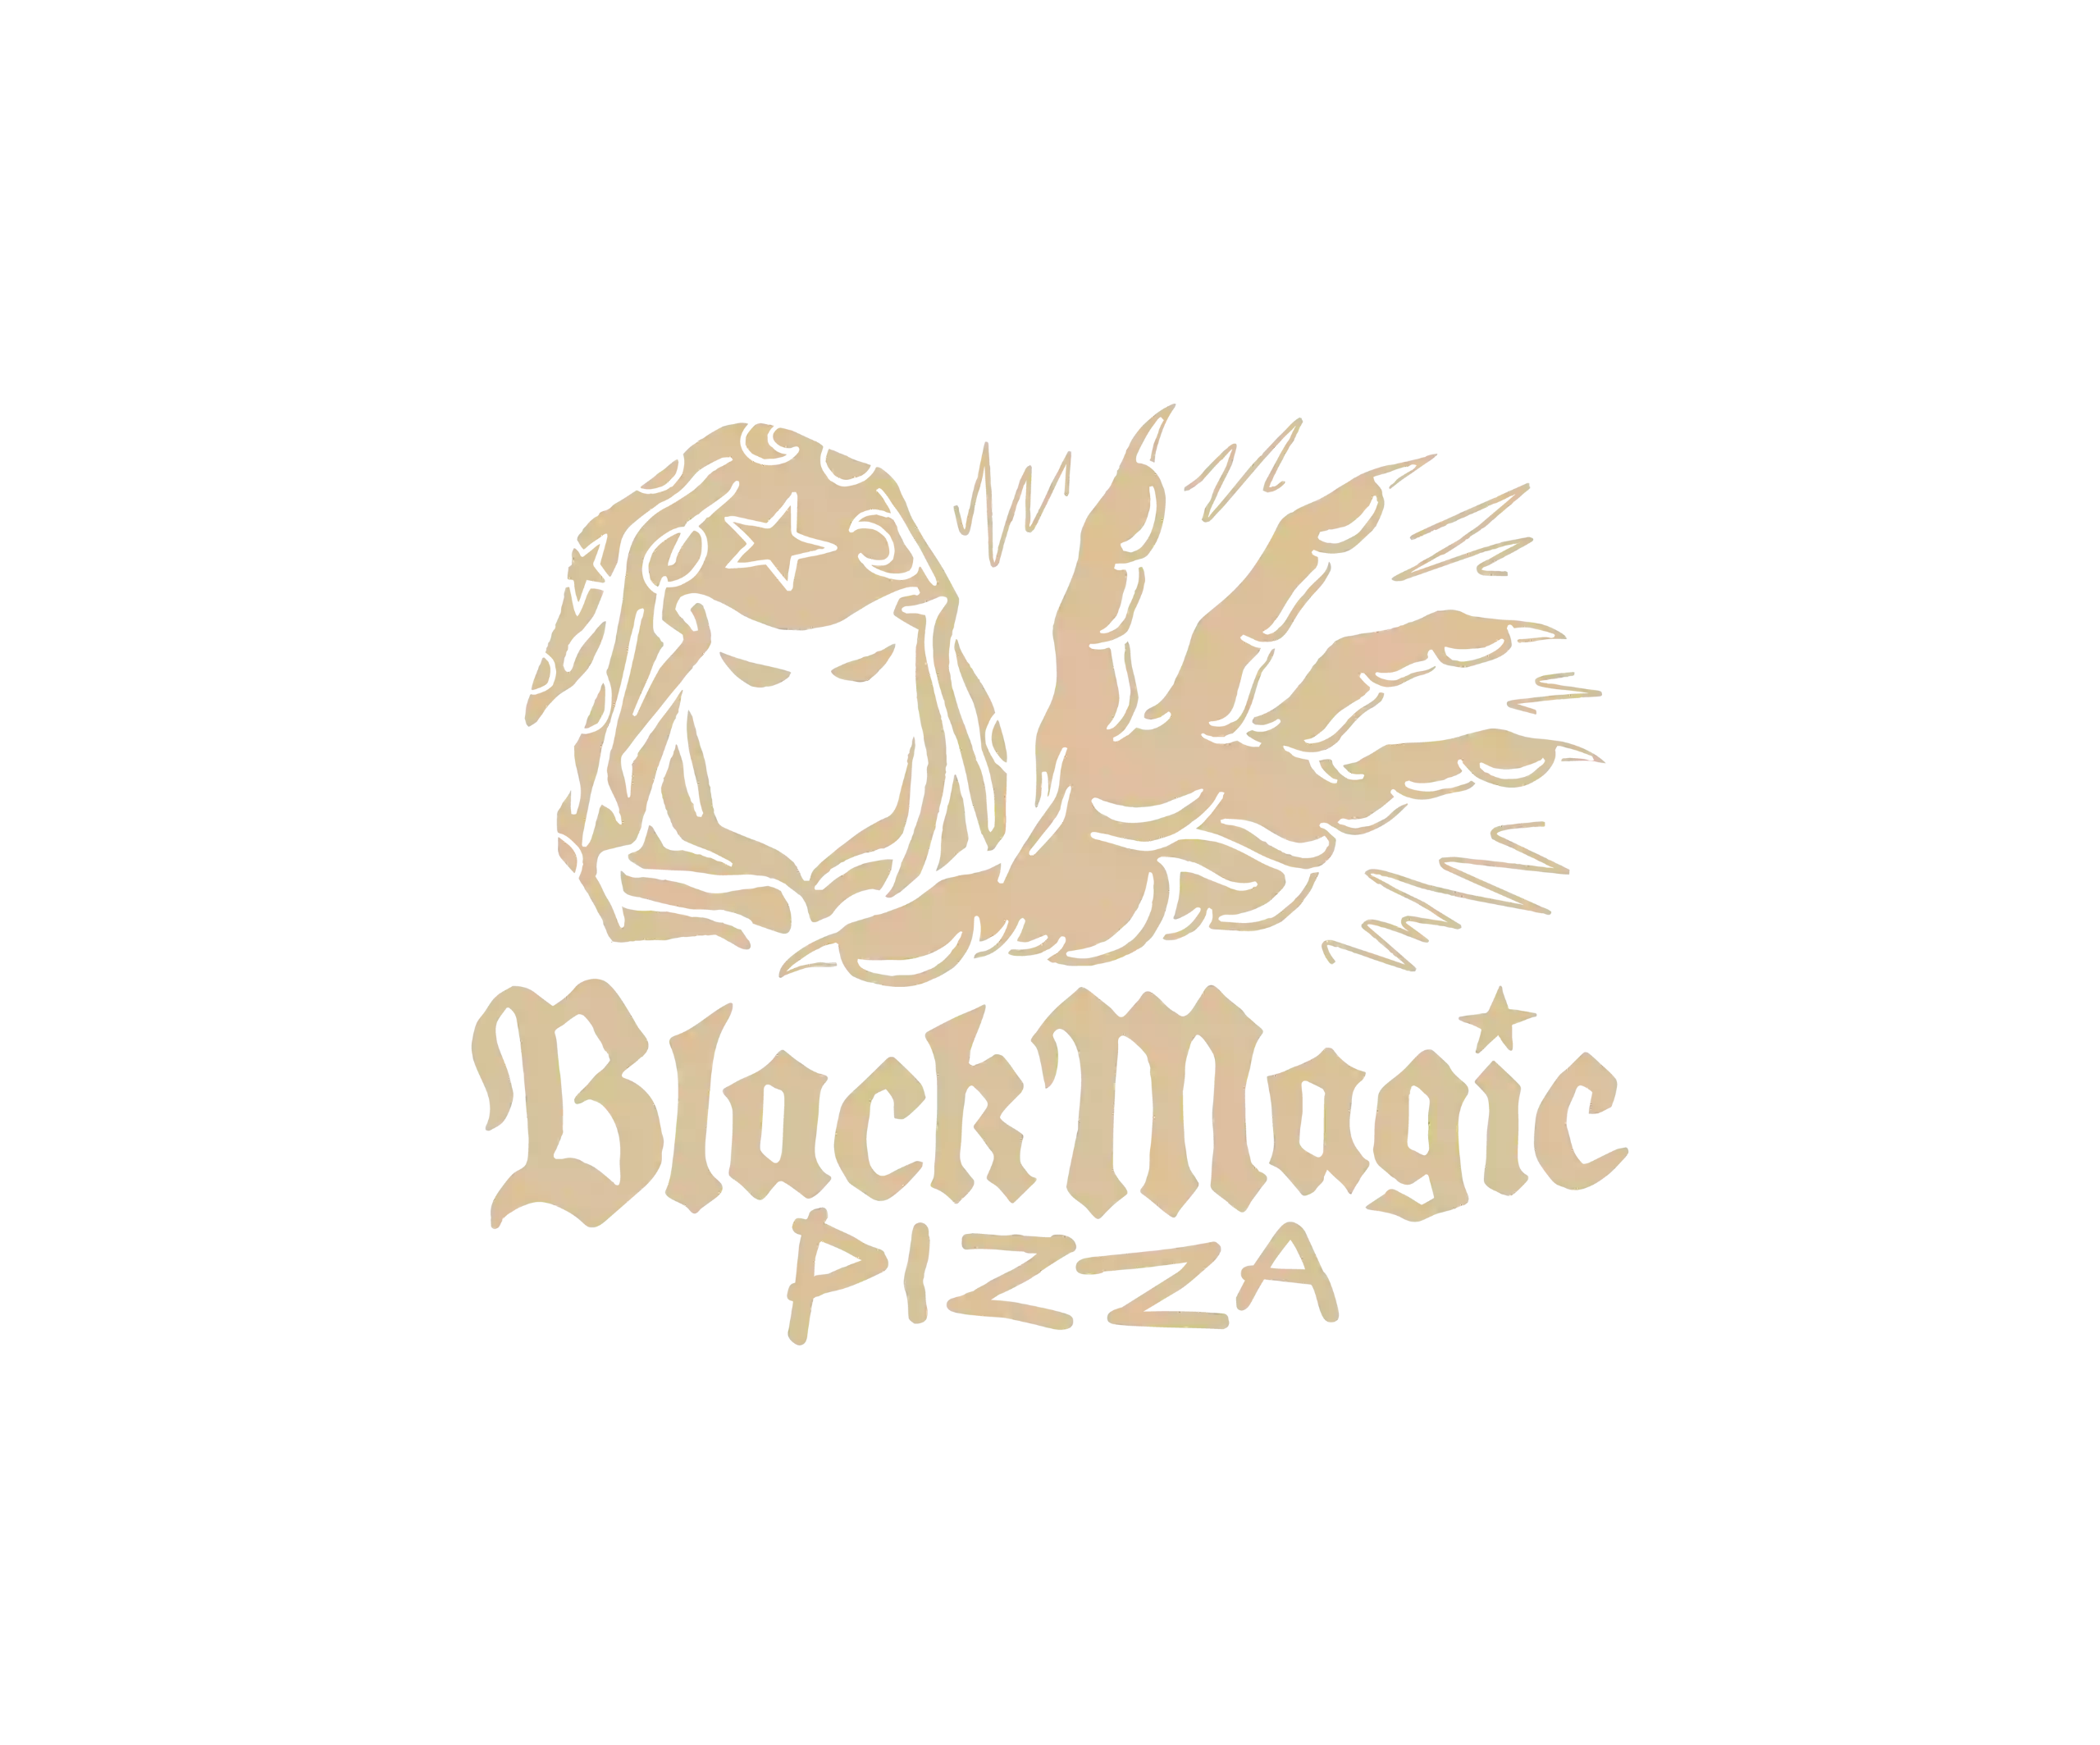 Black Magic Pizza